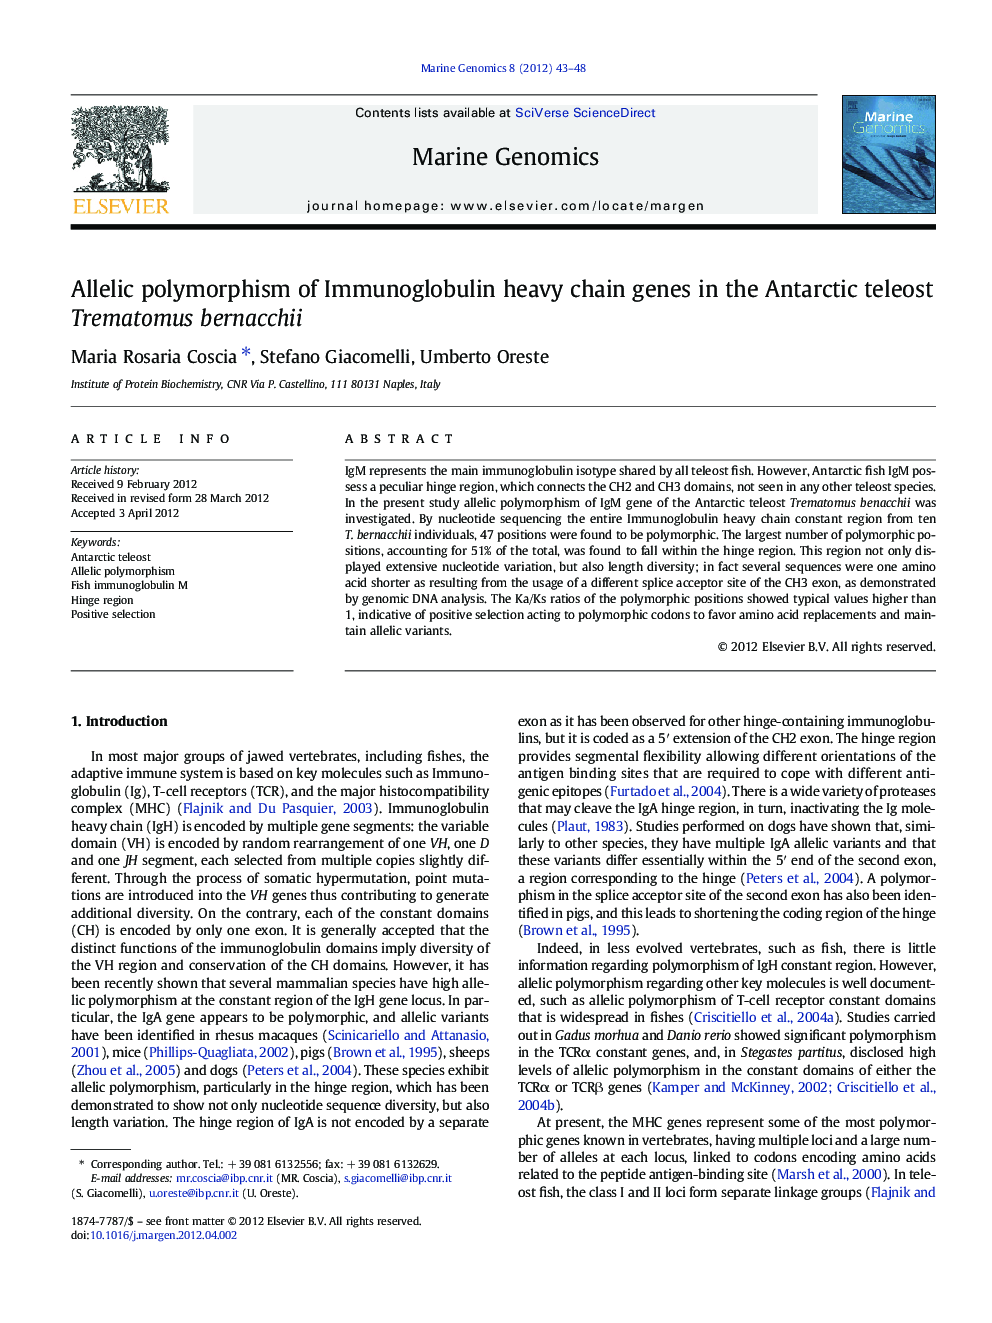 Allelic polymorphism of Immunoglobulin heavy chain genes in the Antarctic teleost Trematomus bernacchii